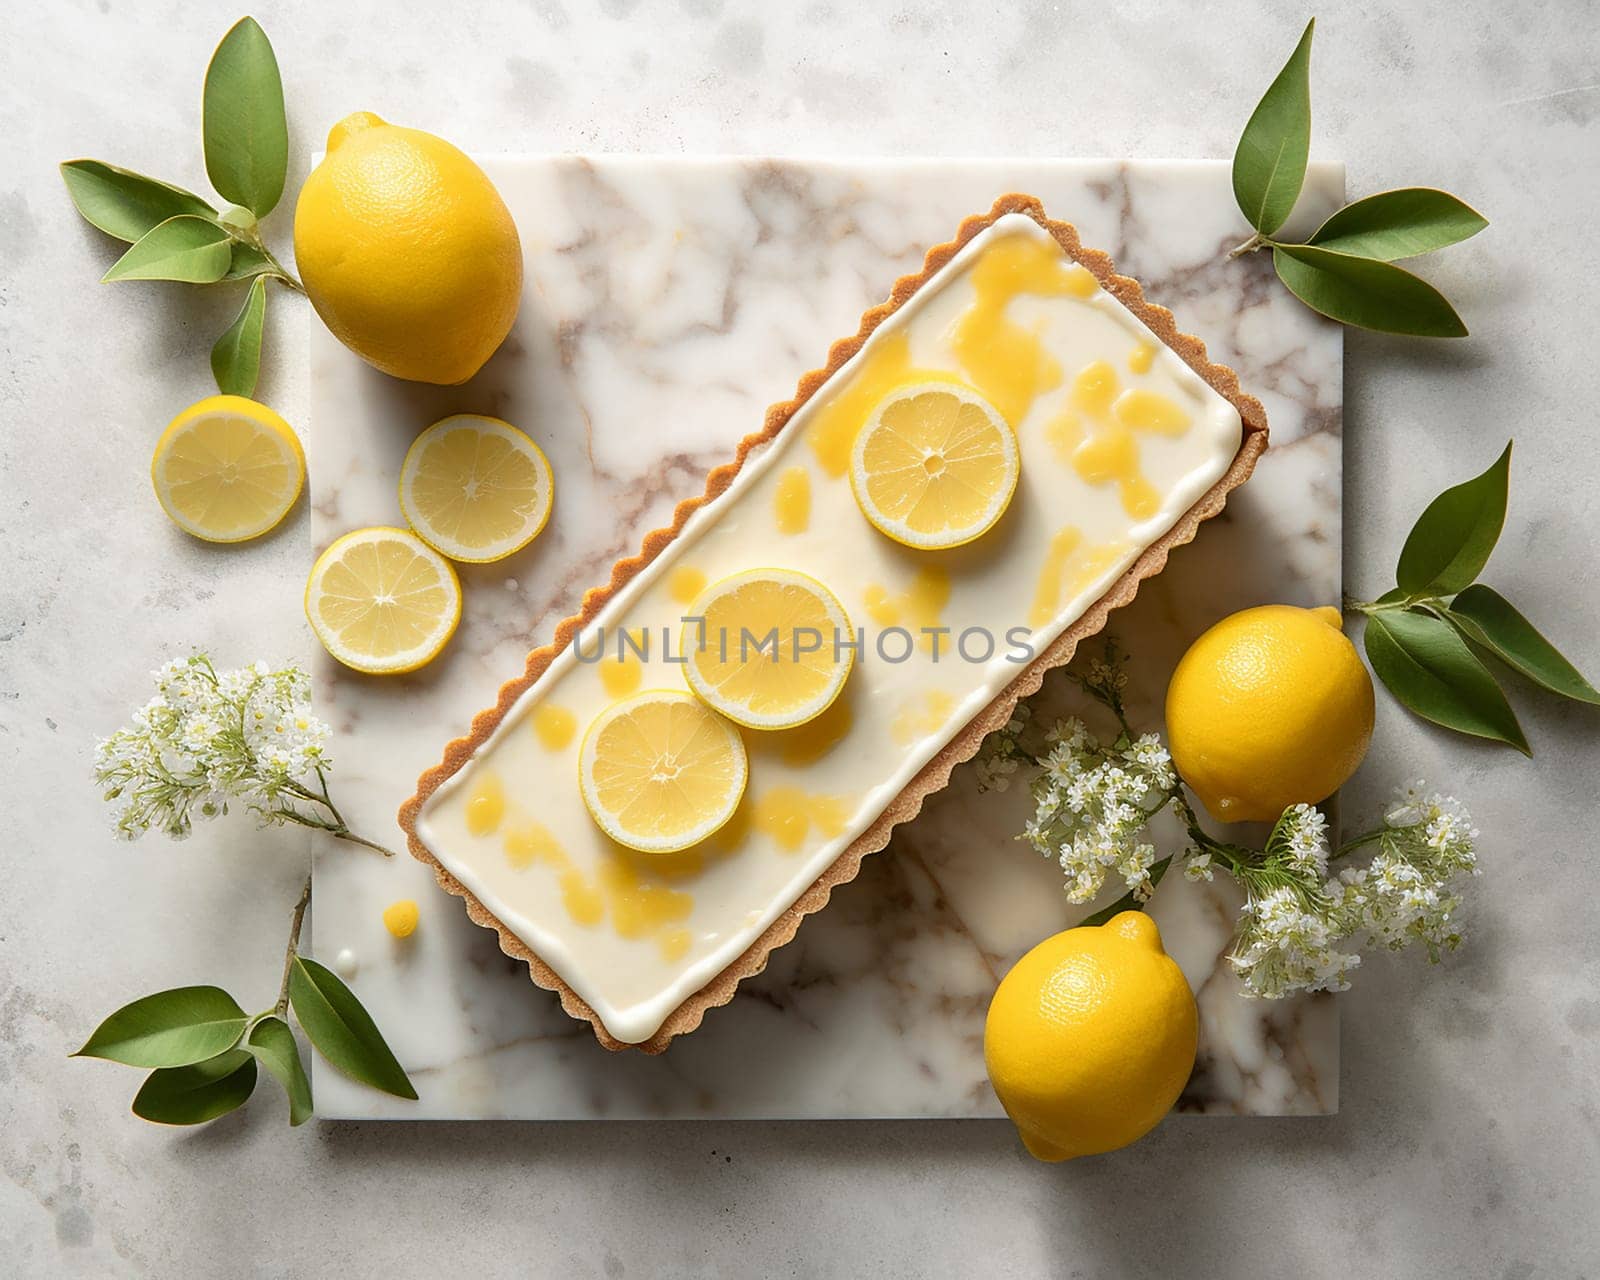 Lemon tart on marble surface with fresh lemons and flowers.